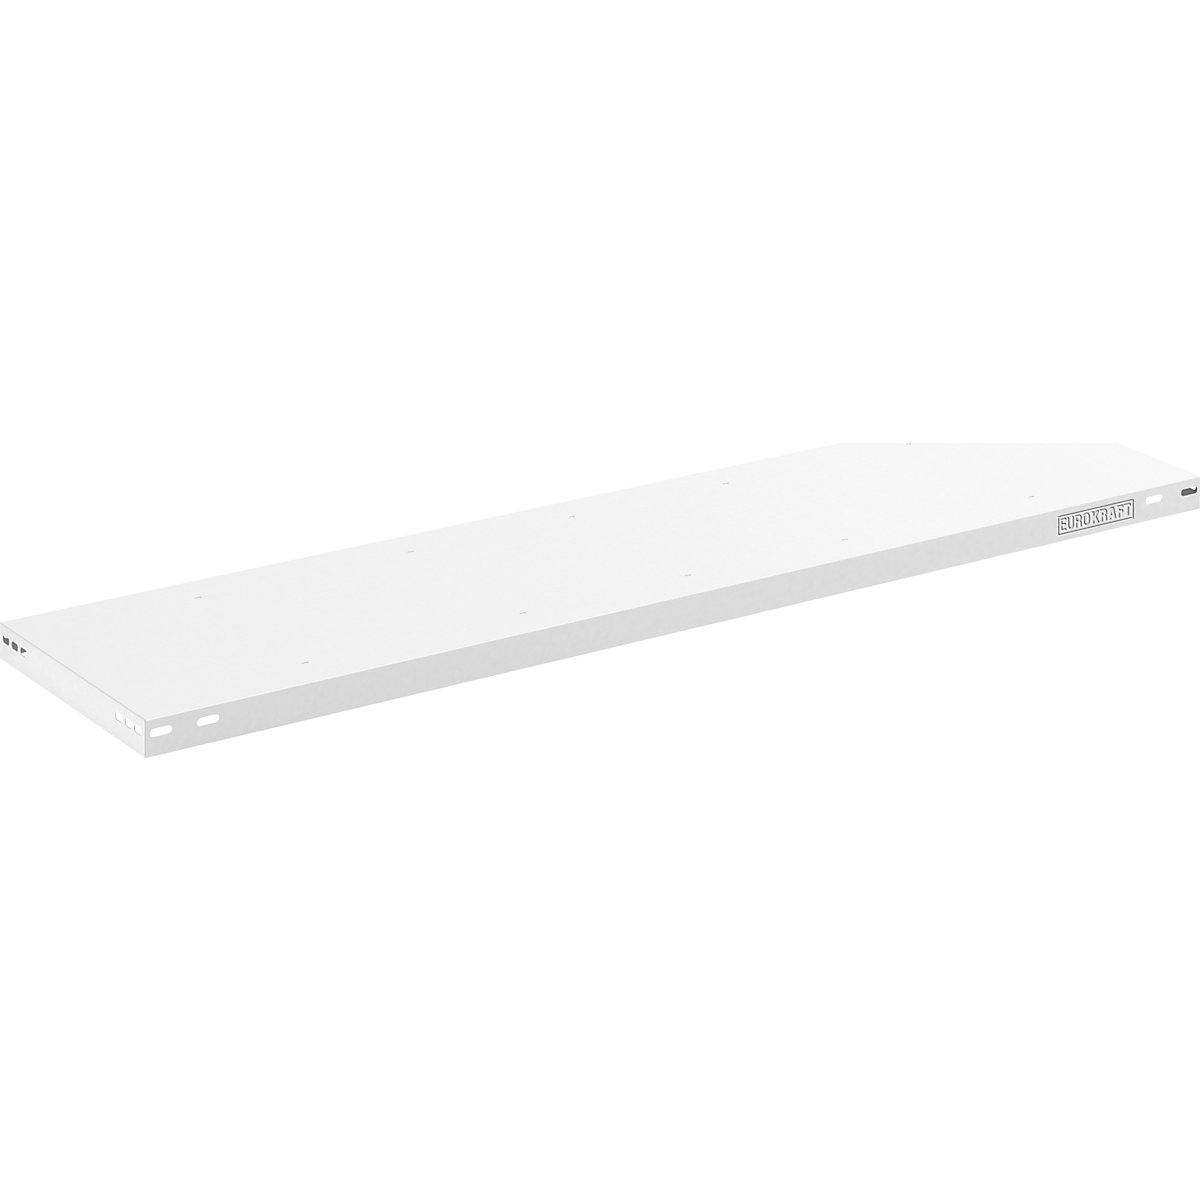 Shelf – eurokraft pro, light grey, medium duty, WxD 1300 x 400 mm